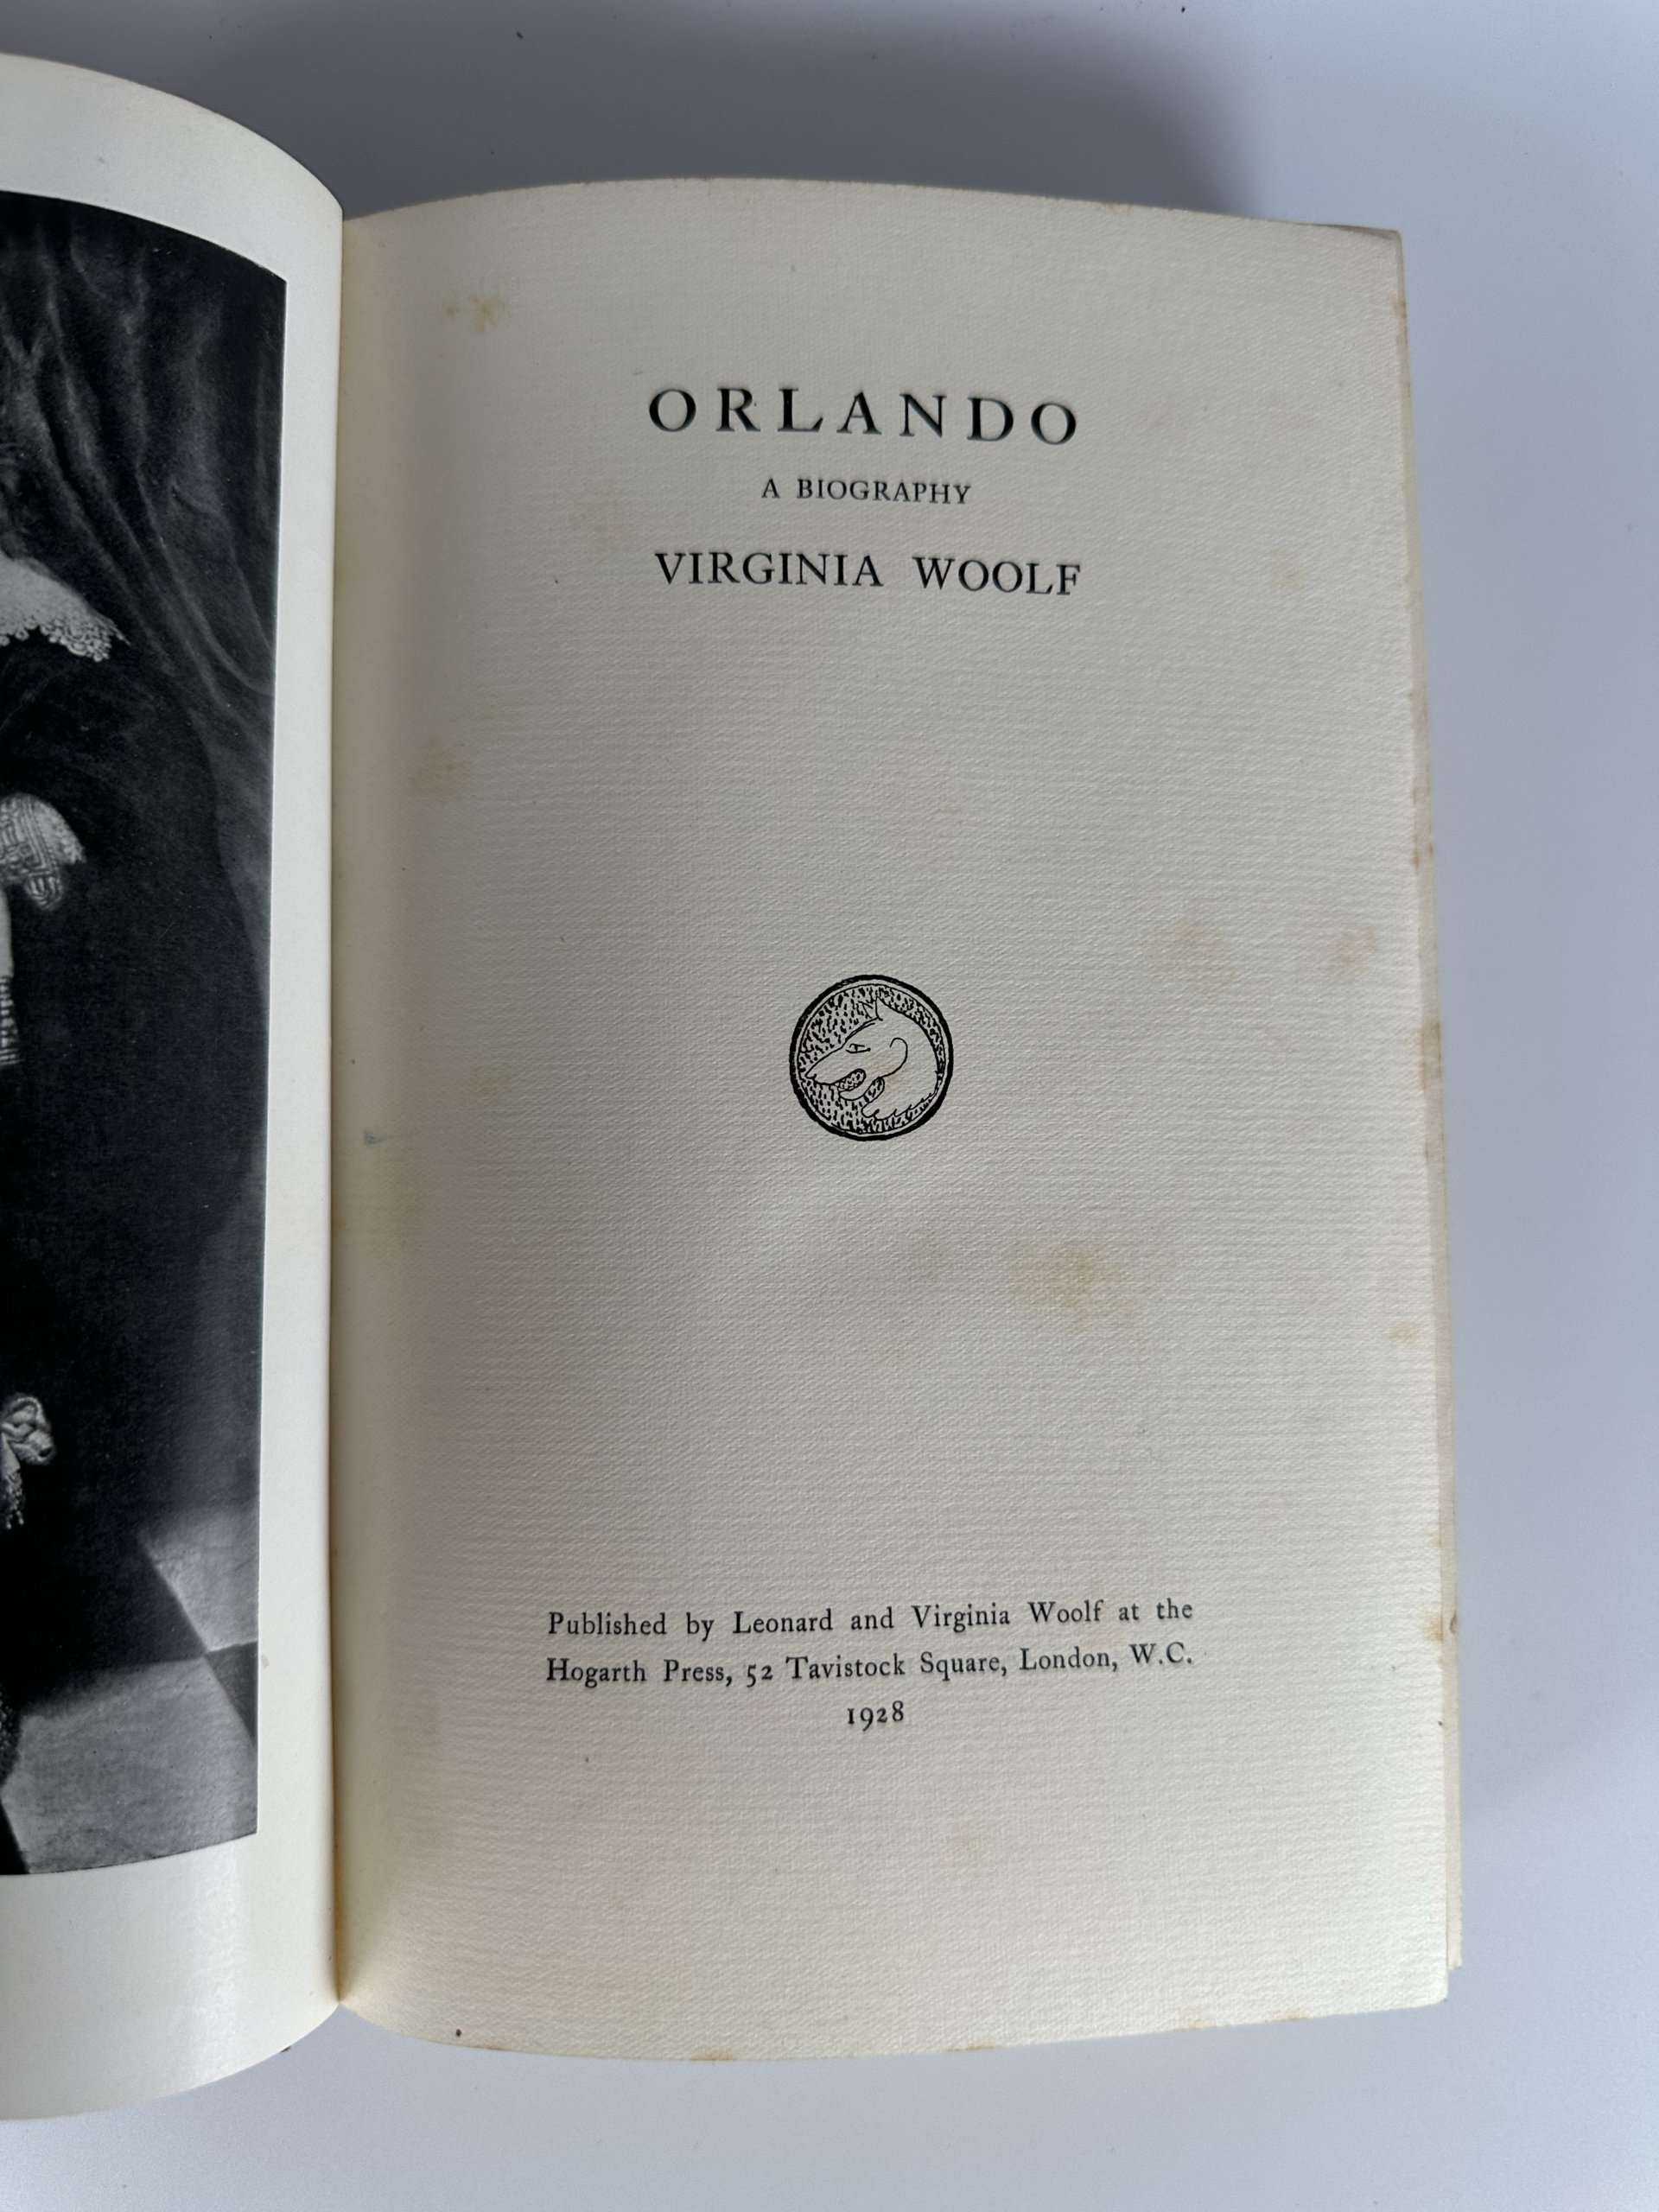 virginia woolf orlando first edition4